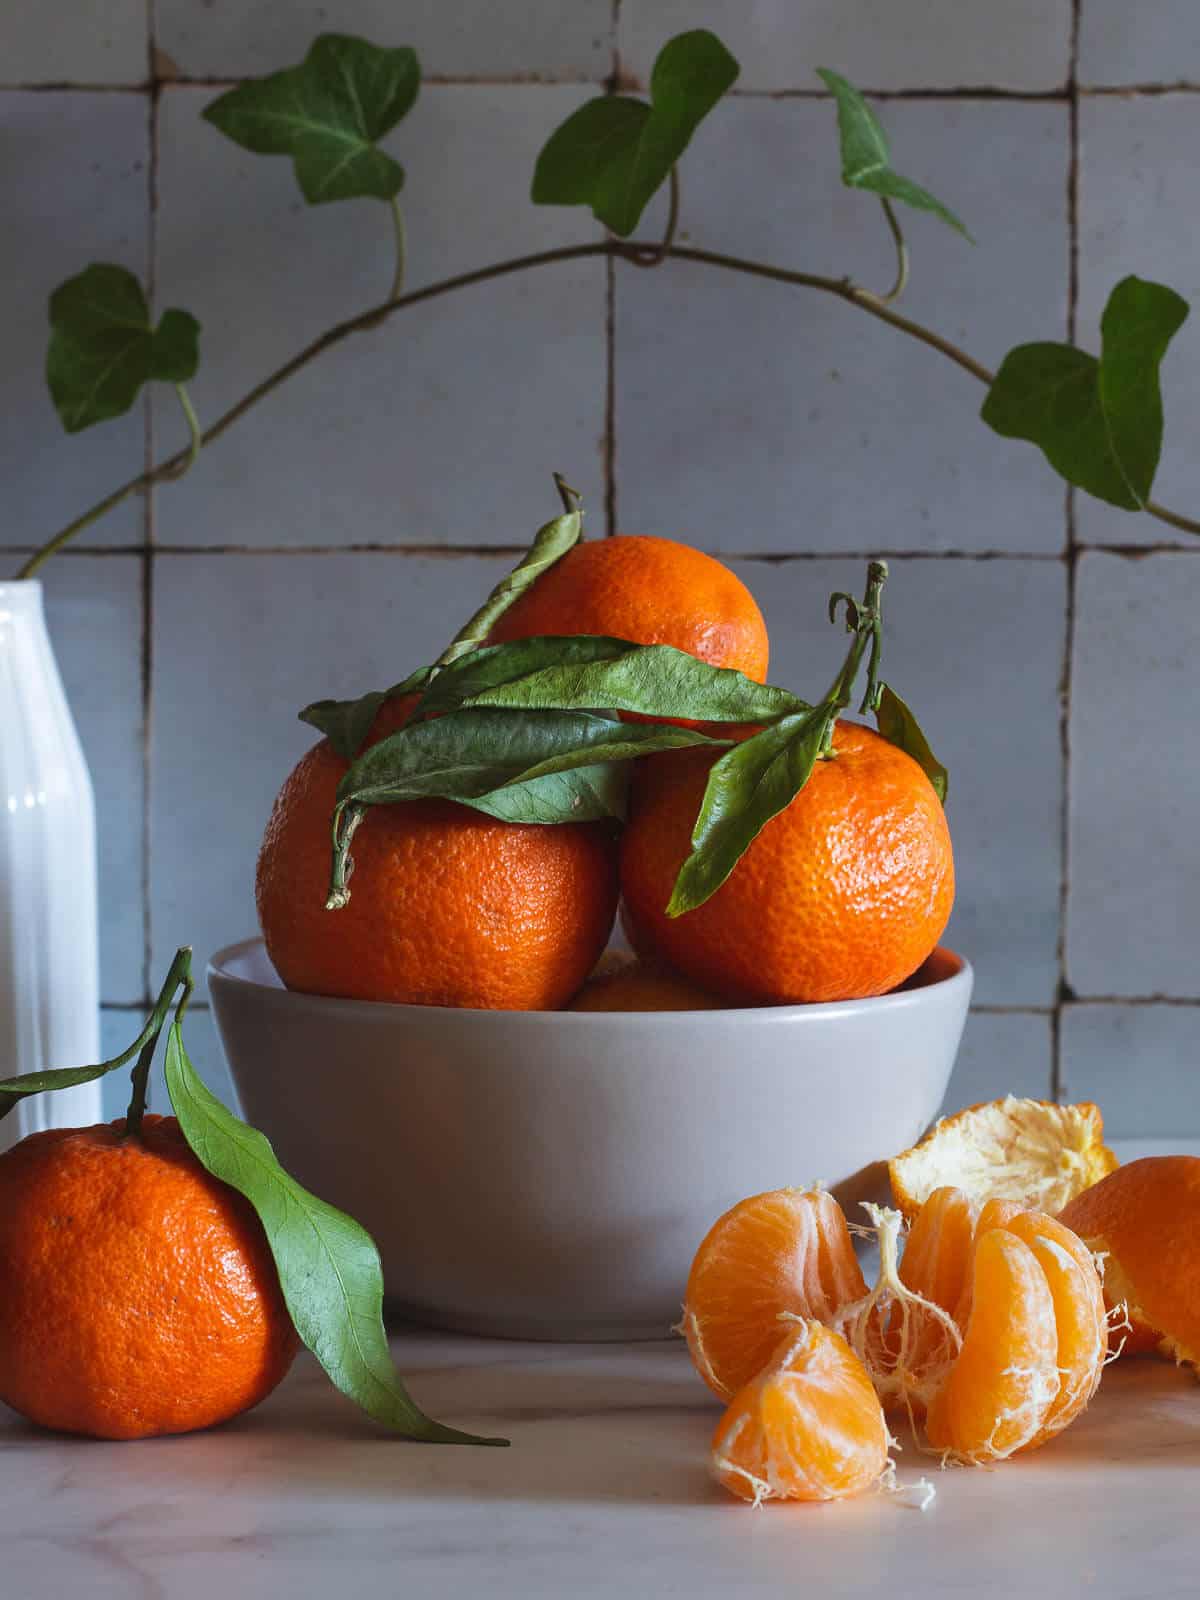 clementine or mandarine orange fruit.